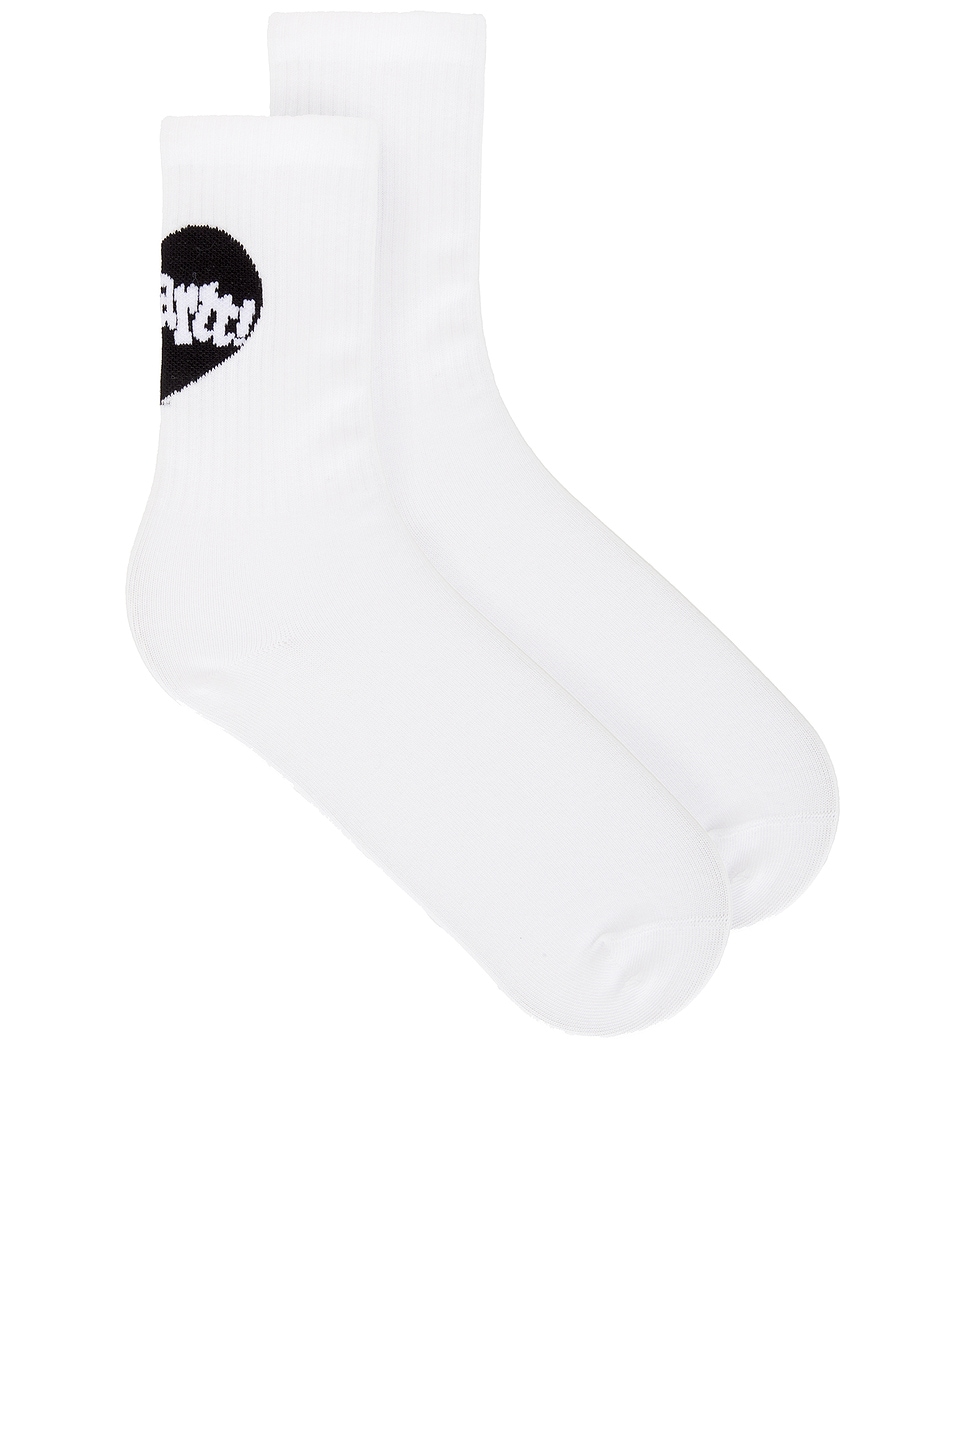 Amour Socks in White